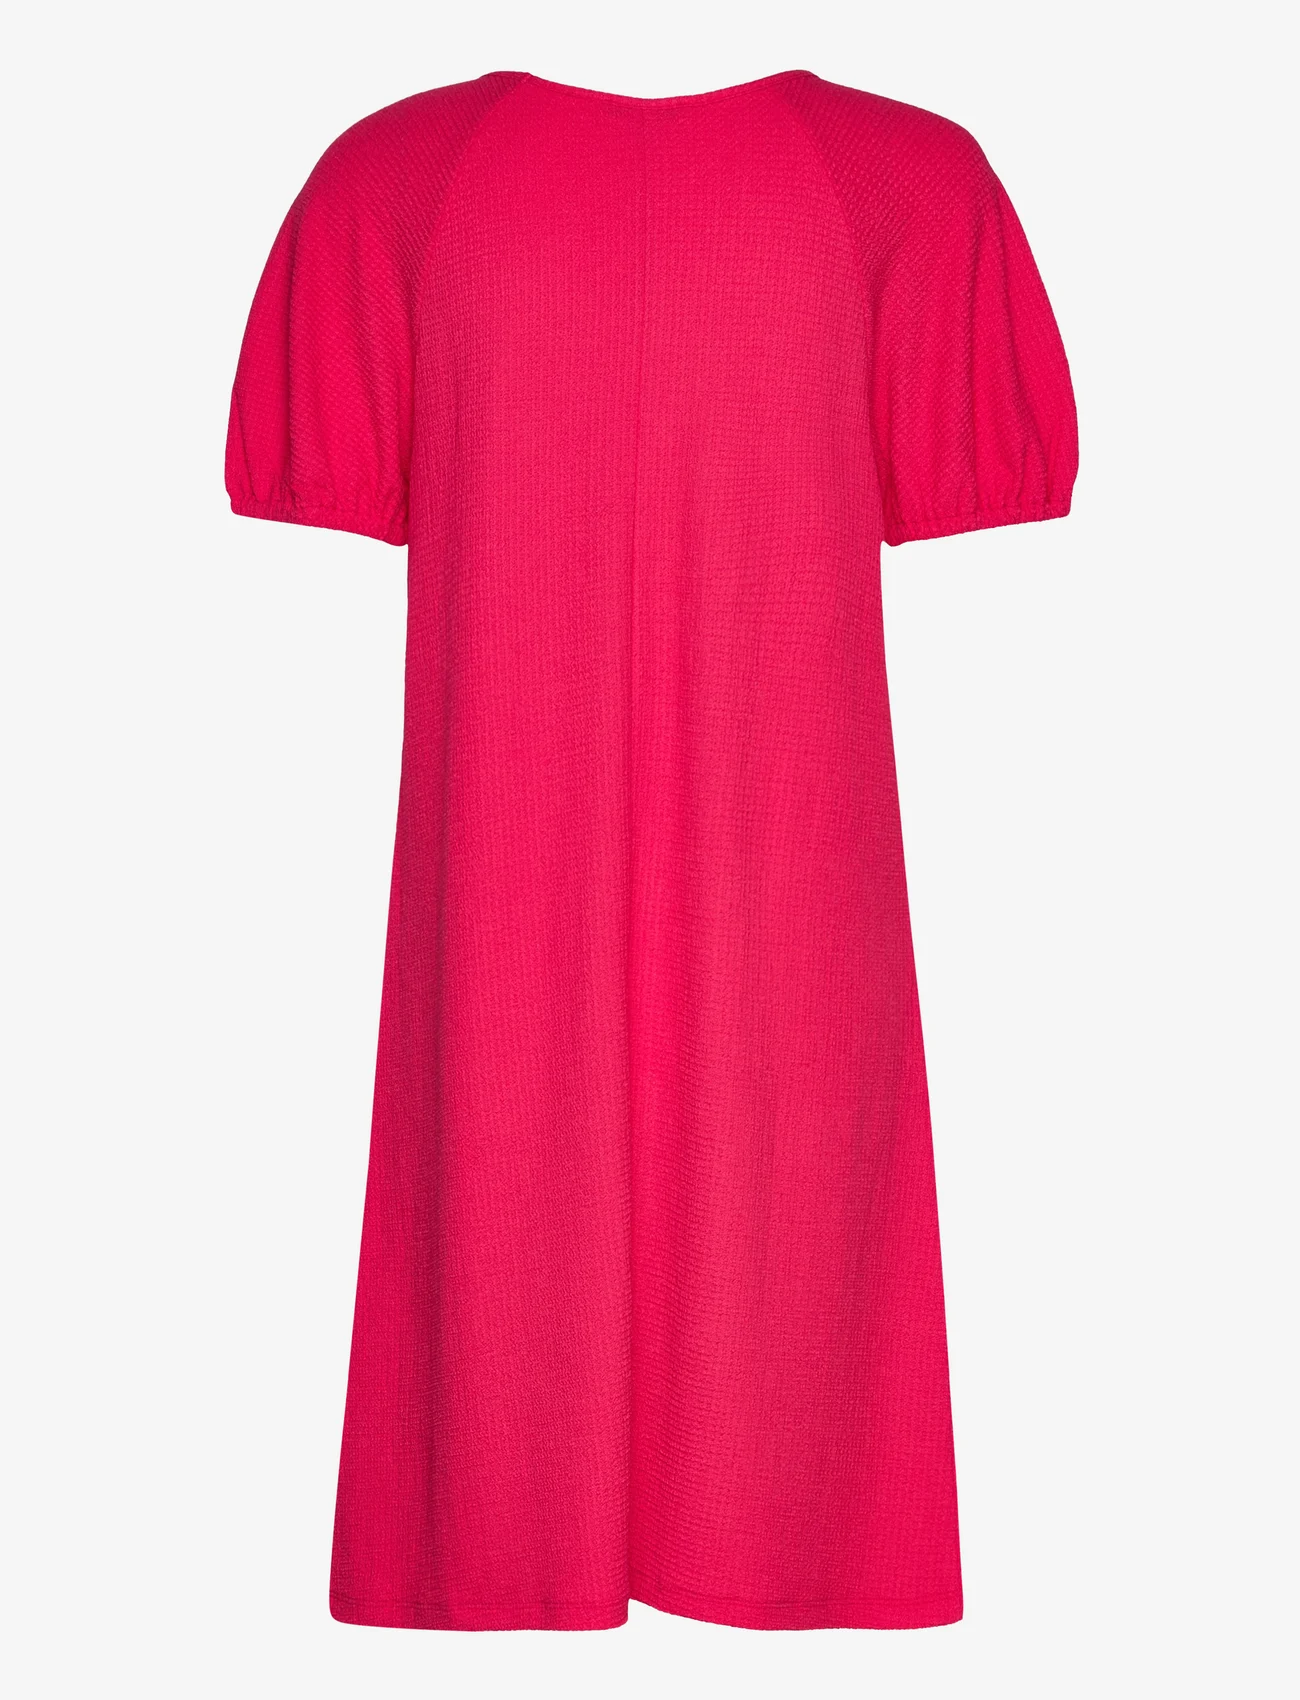 Garcia - ladies dress - sommerkleider - rouge red - 1